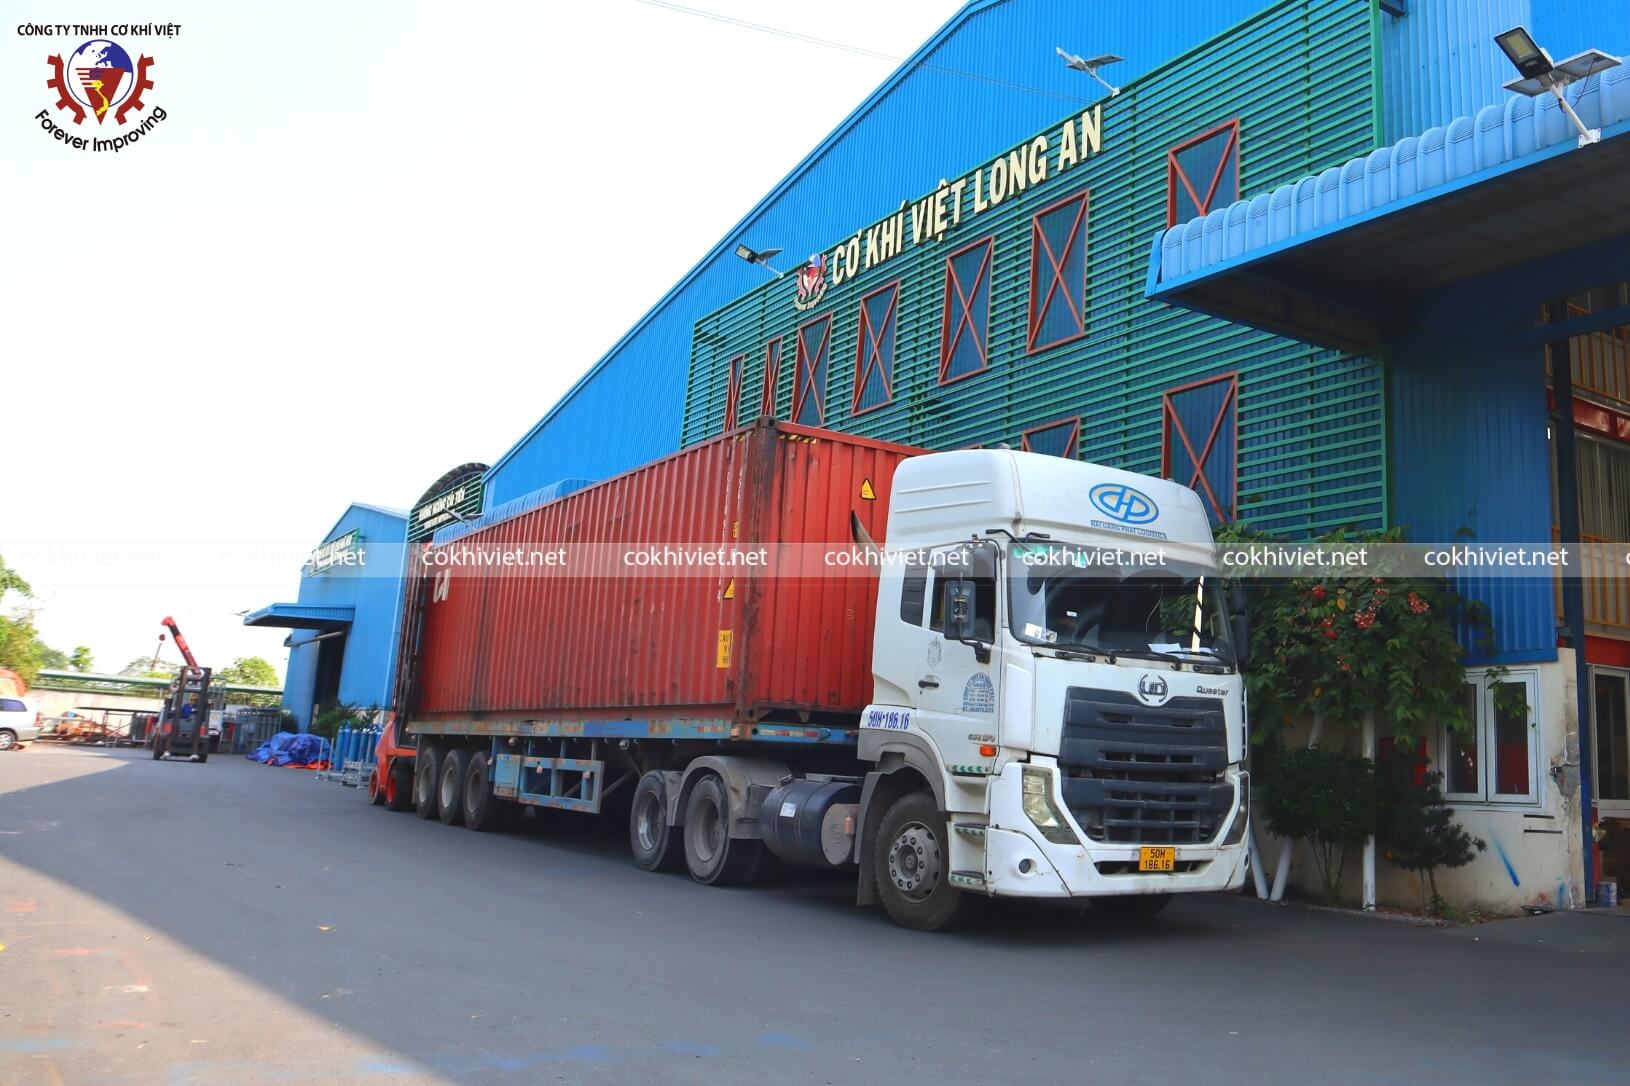 Viet Mechanical exports storage racks